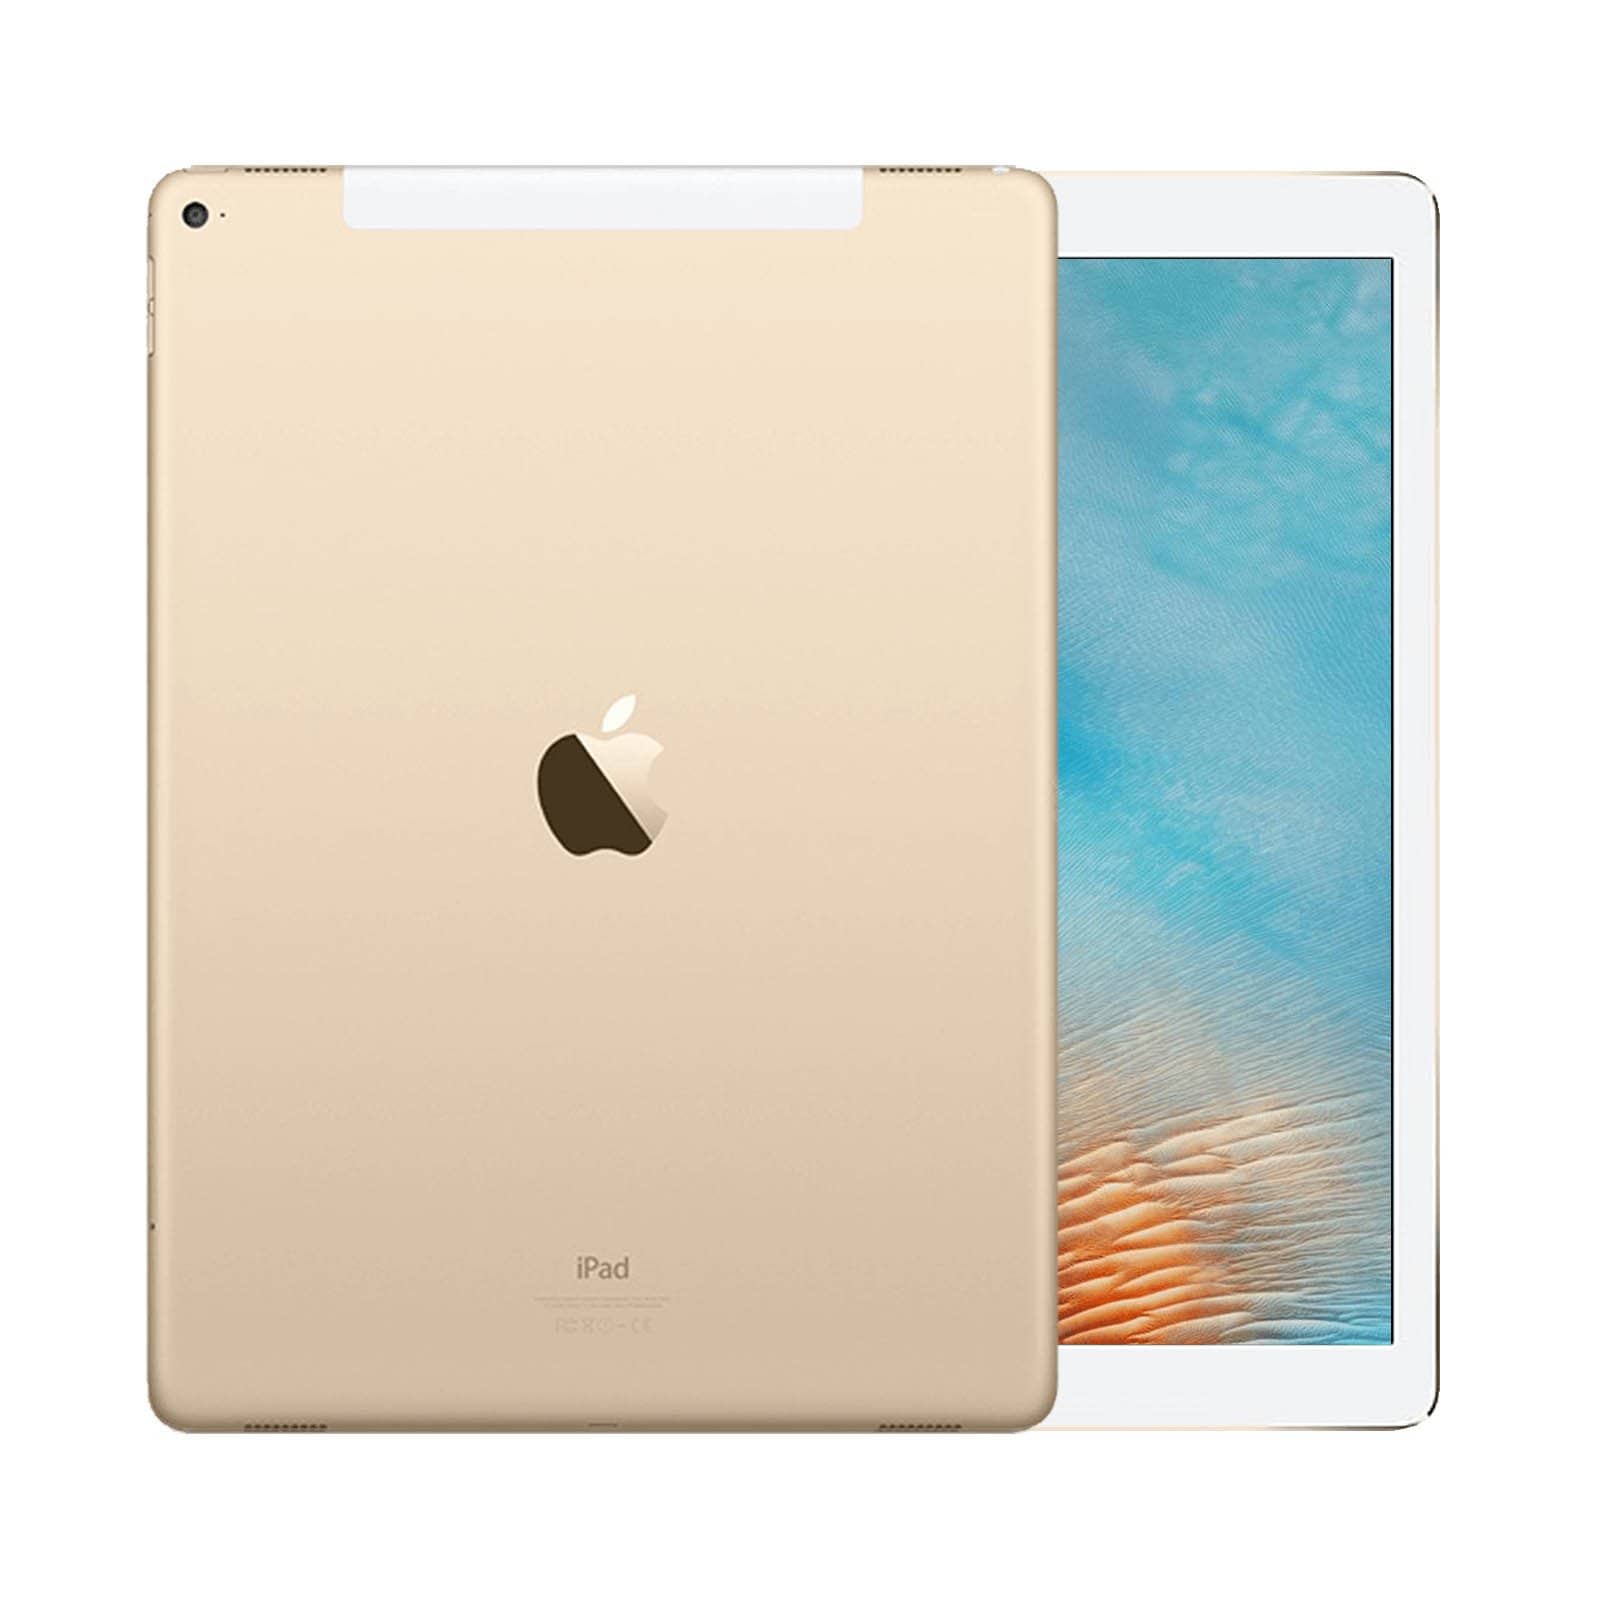 iPad Pro 12.9 Inch 2nd Gen 64GB Gold Pristine - WiFi 64GB Gold Pristine